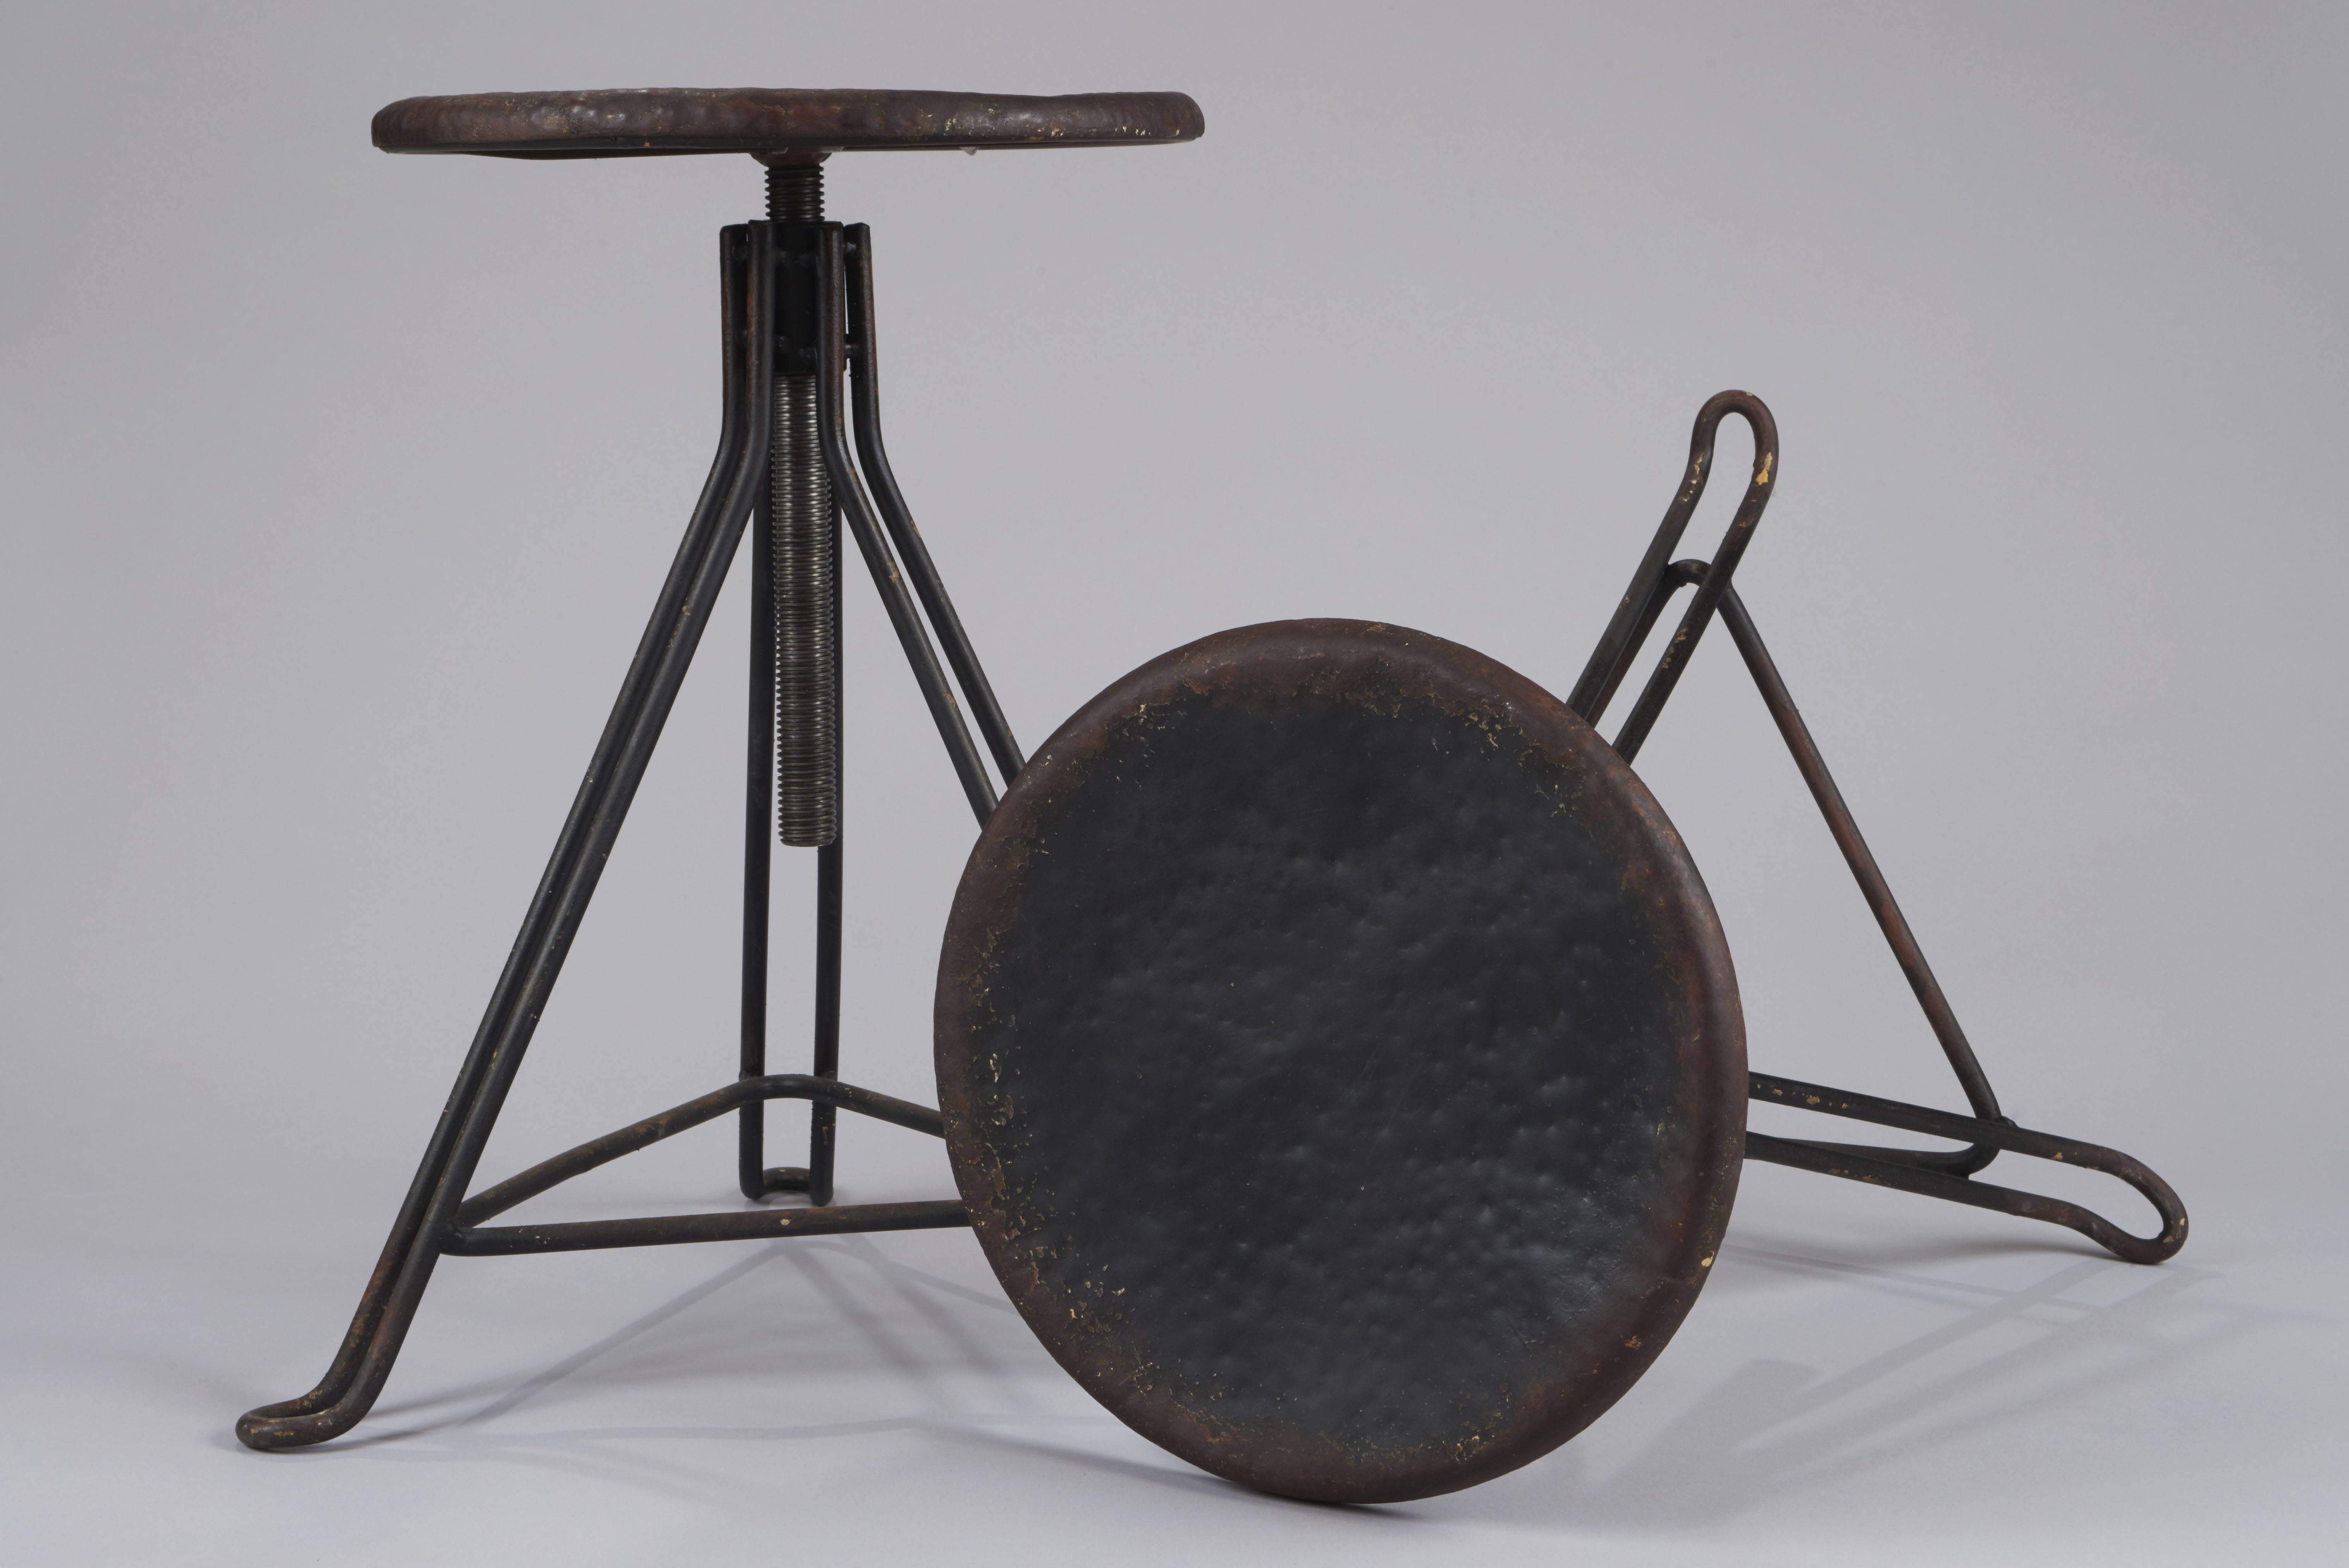 Pair of small circular workshop stools - tripod - black patina - in screw, France, 20th century. Dimensions: diameter 30cm, H min 45 cm, H max 70.